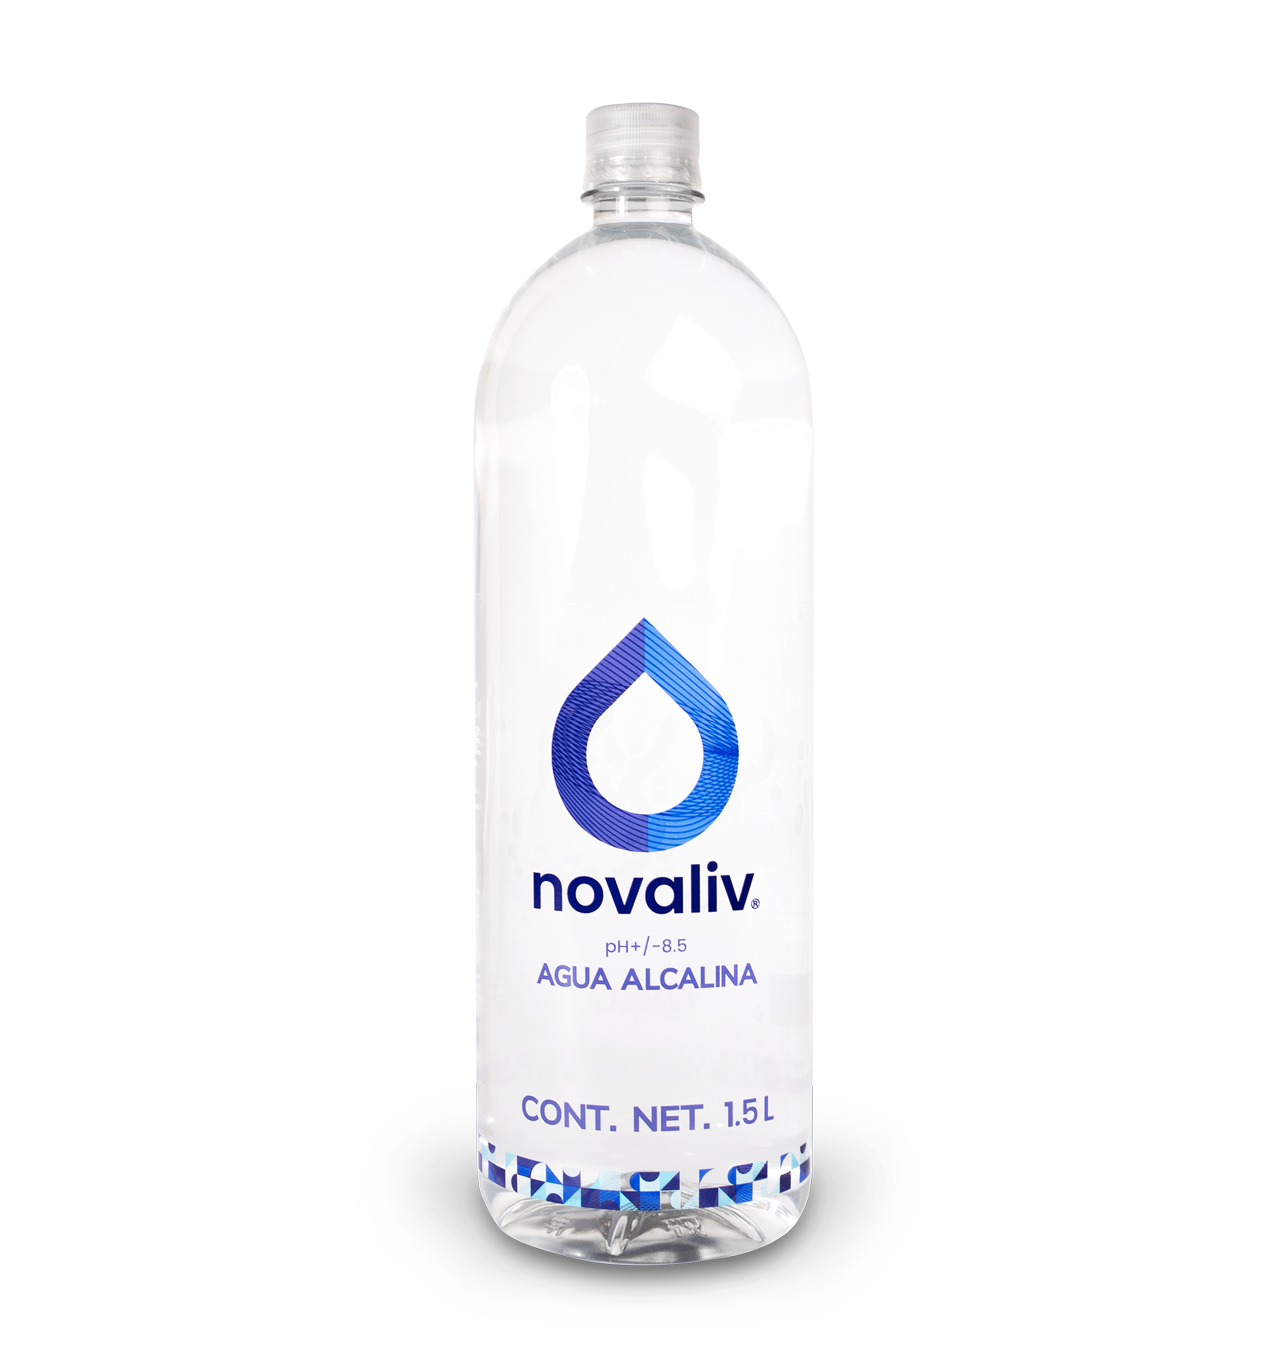 Novaliv Agua Alcalina 6 x 1.5 L - Novaliv